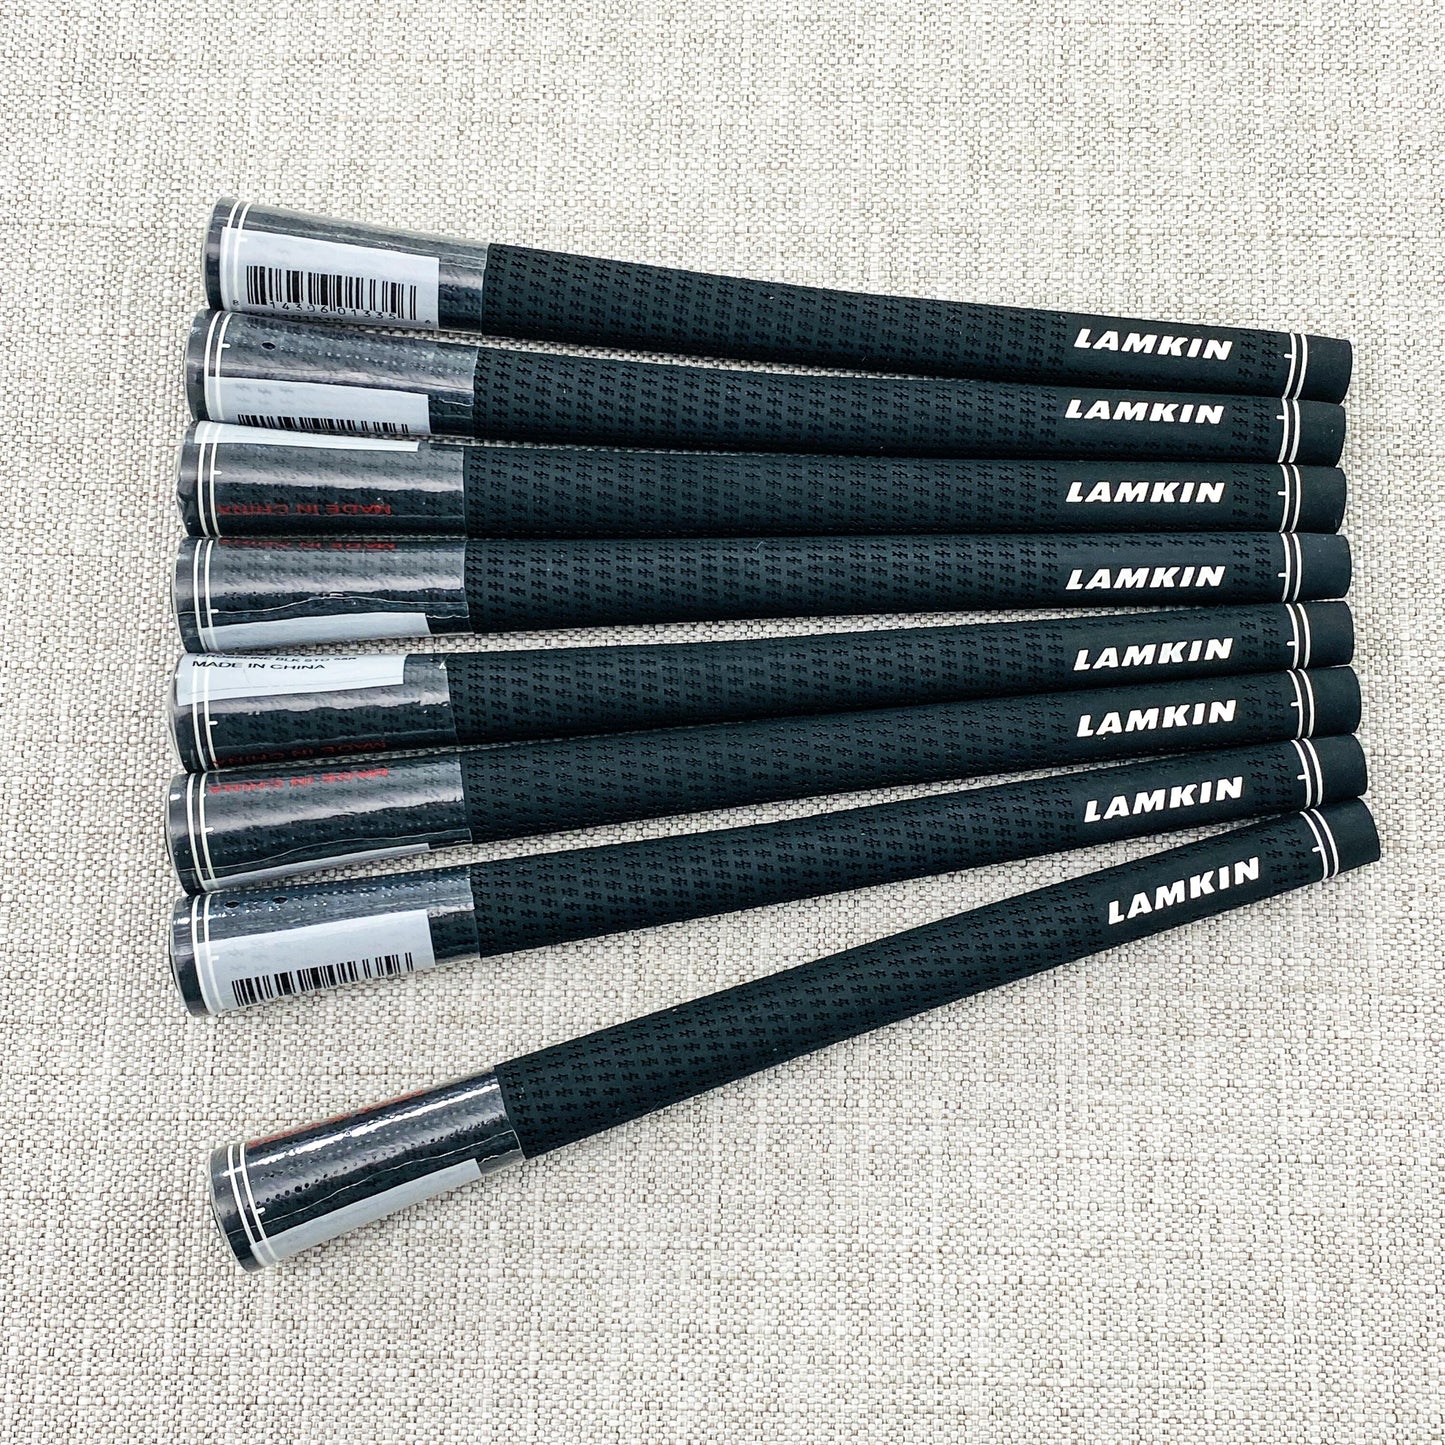 Lamkin Crossline Black swing grip. Choice of Size. Black - Price includes fitment.